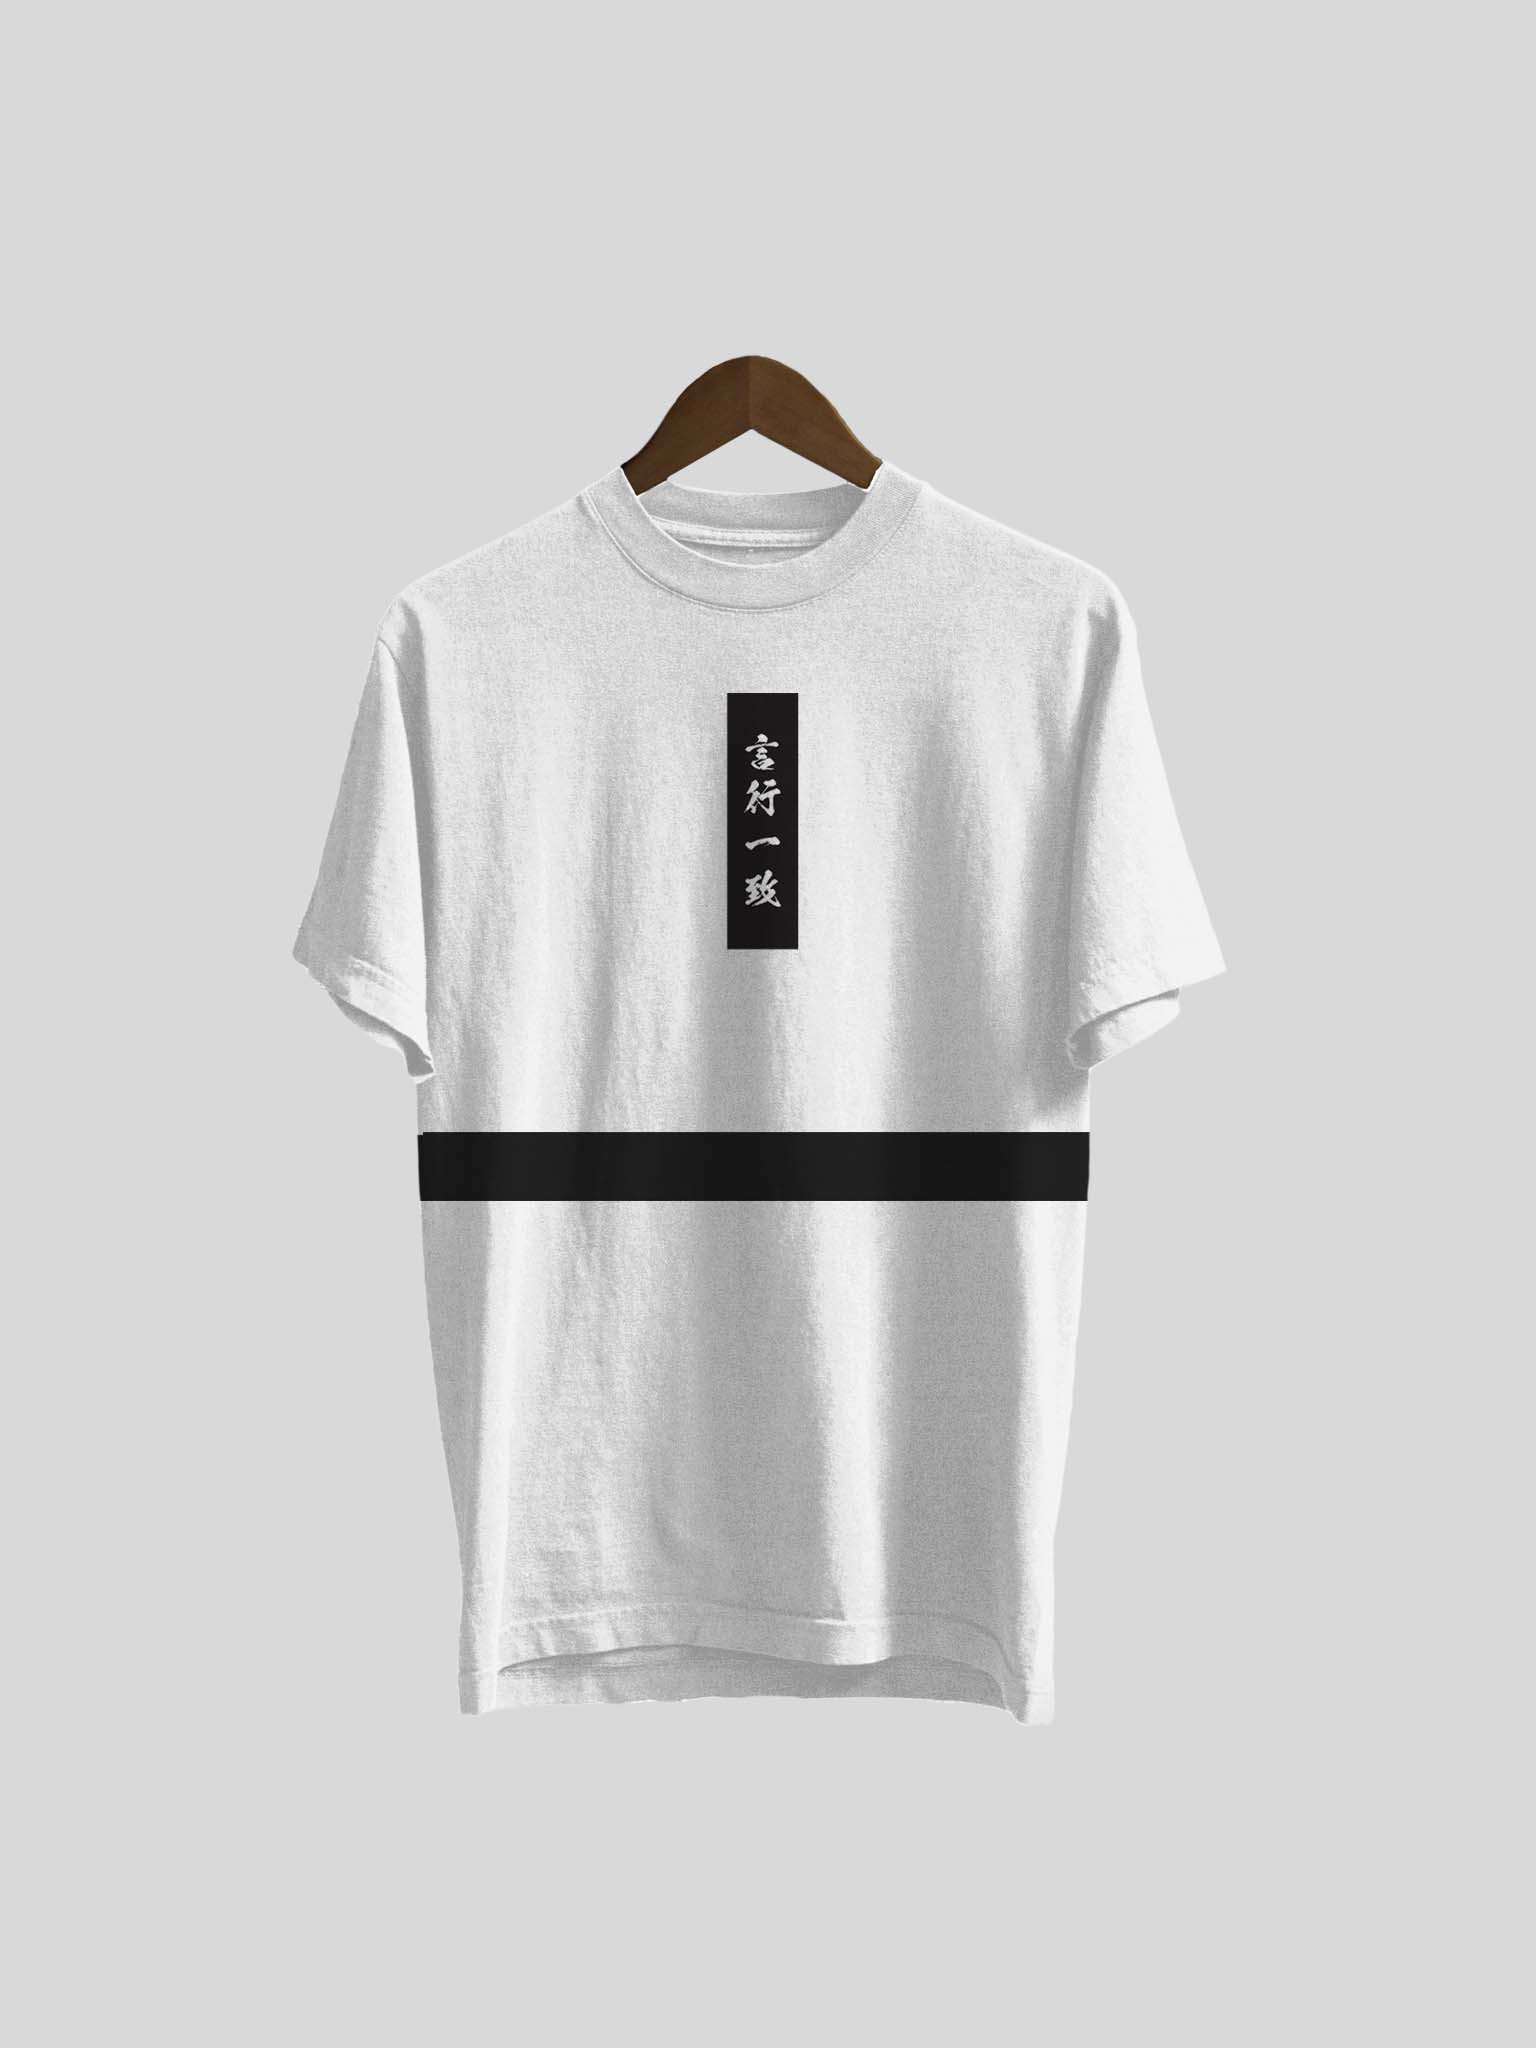 Practice What You Preach - Japanese Kanji Shirt - White